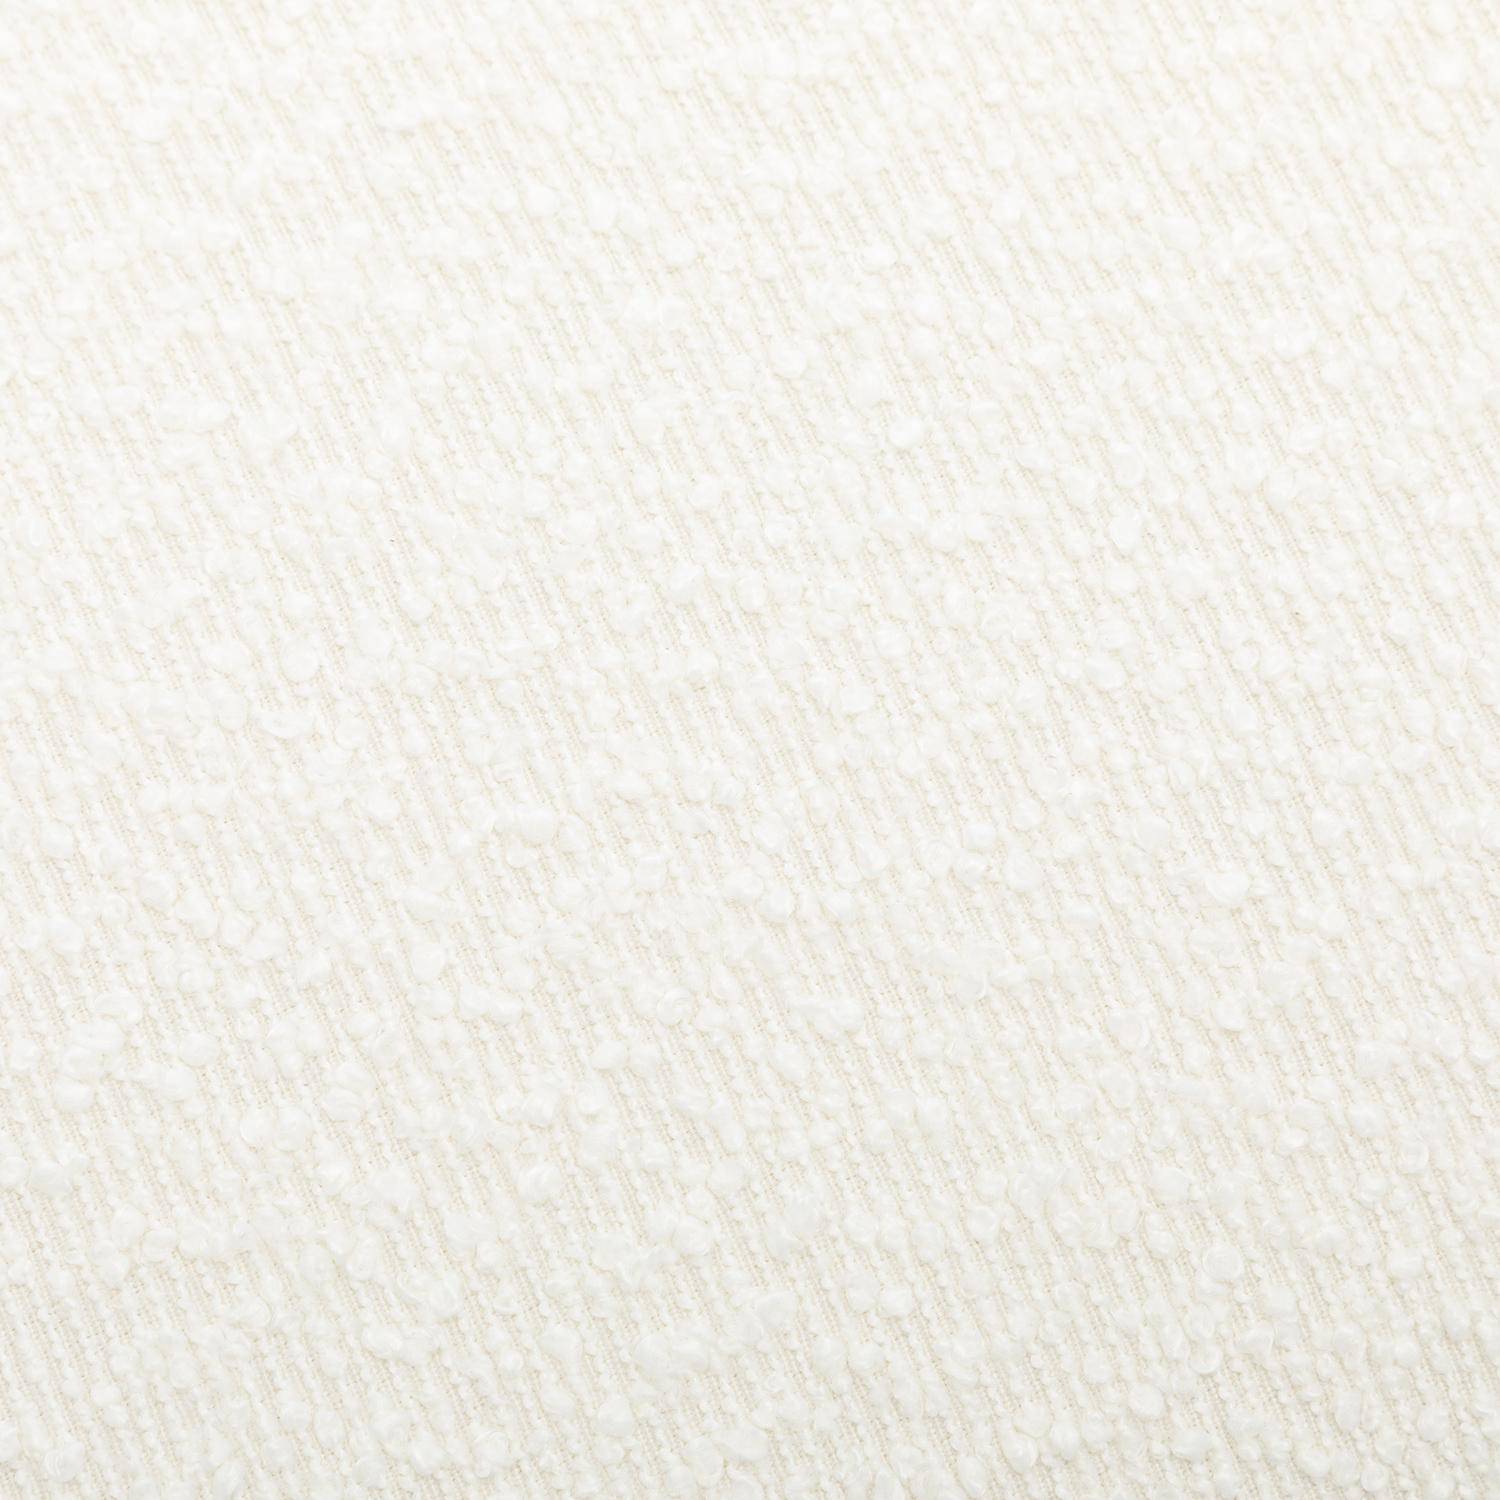 Taburete puf rizado texturado blanco A 44 x P 44 x Alt 42cm -SHAWN Photo5